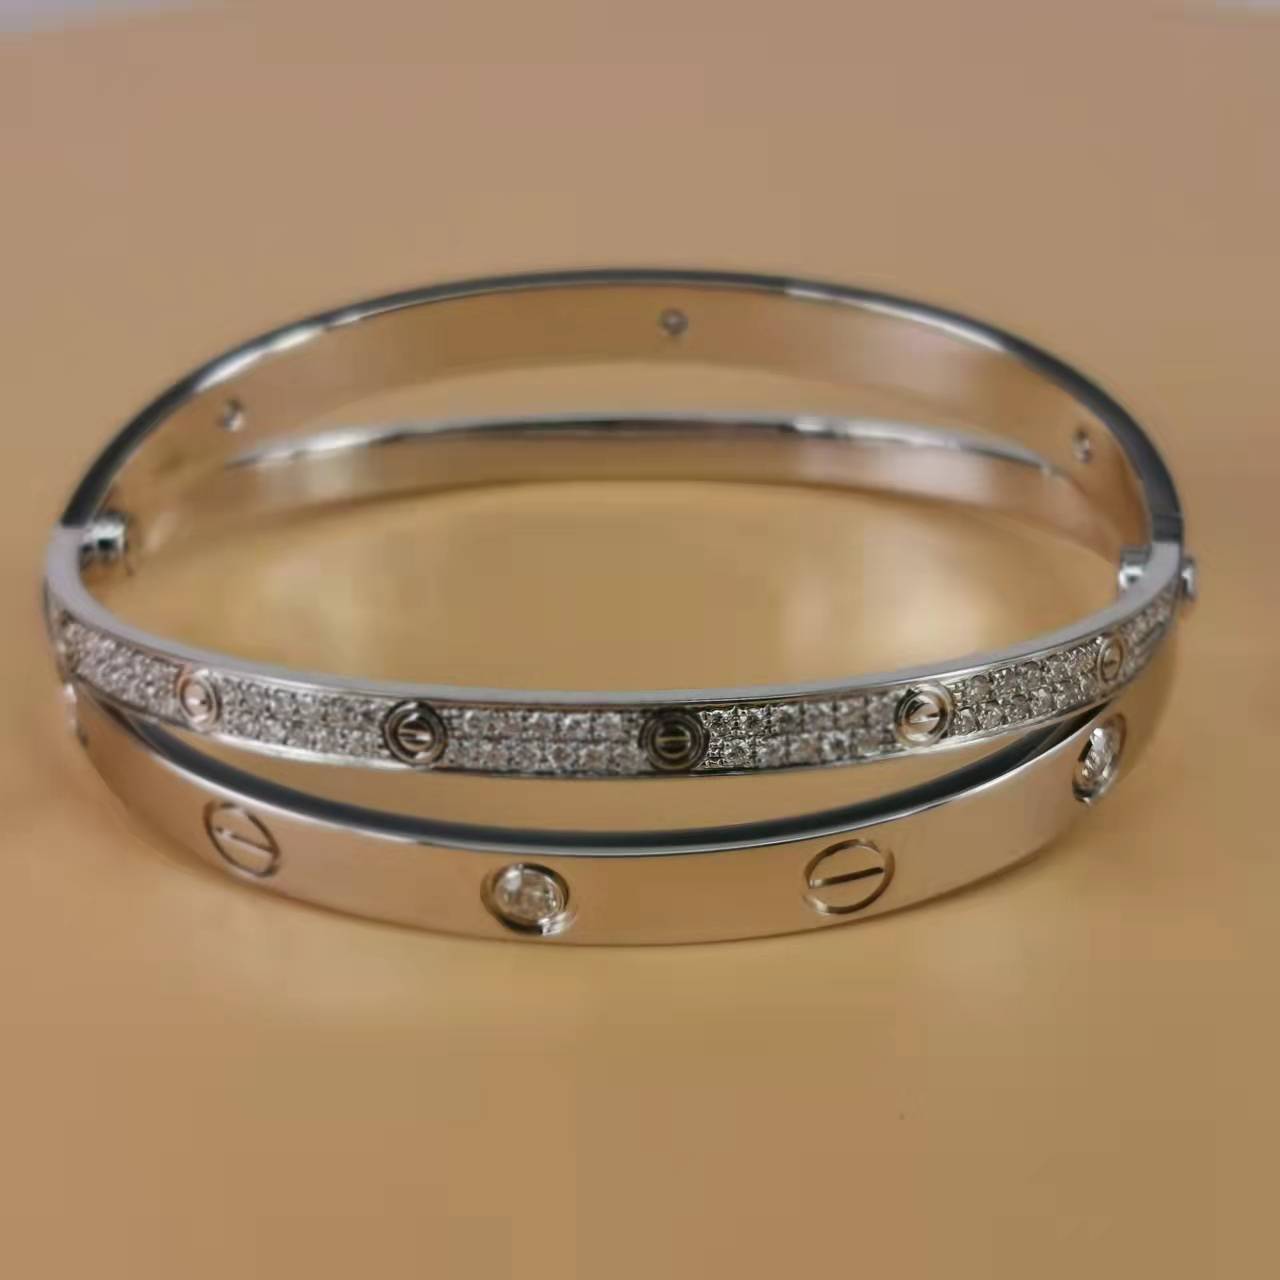 Cartier Bracelet | Product categories | Top Brand 18K Gold Jewelry ...